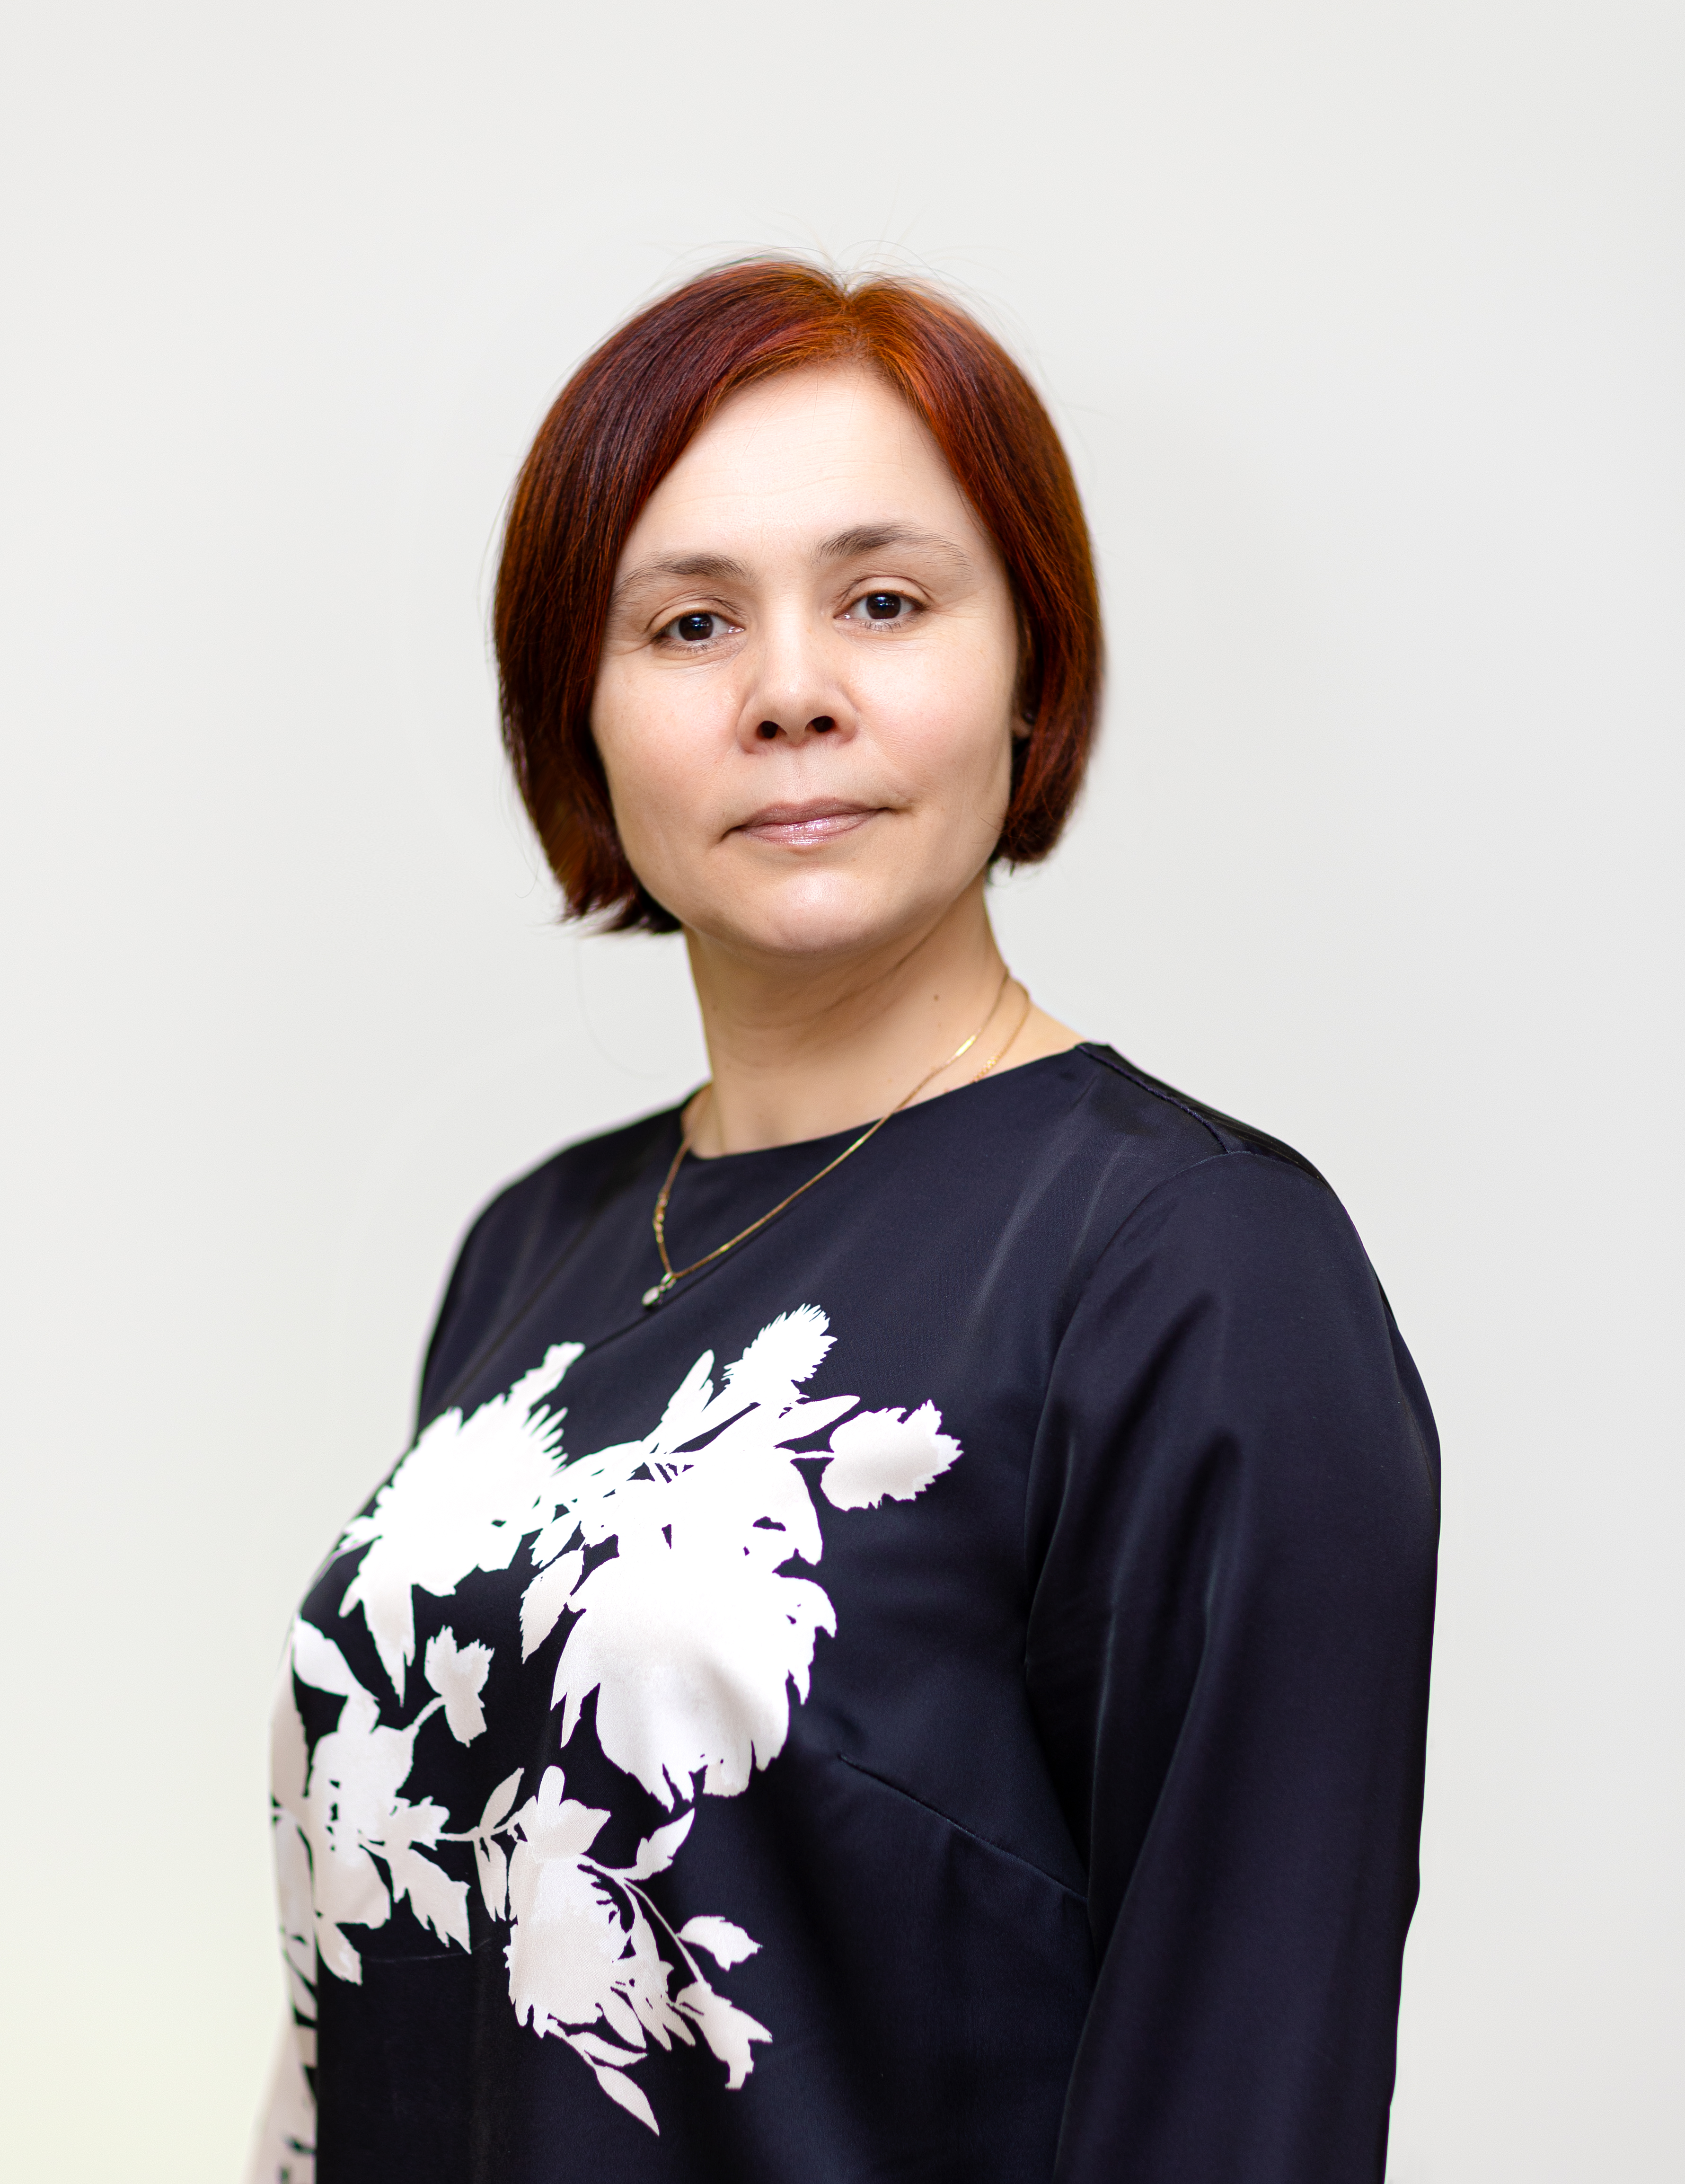 Педагогический работник Баталова Анна Александровна.